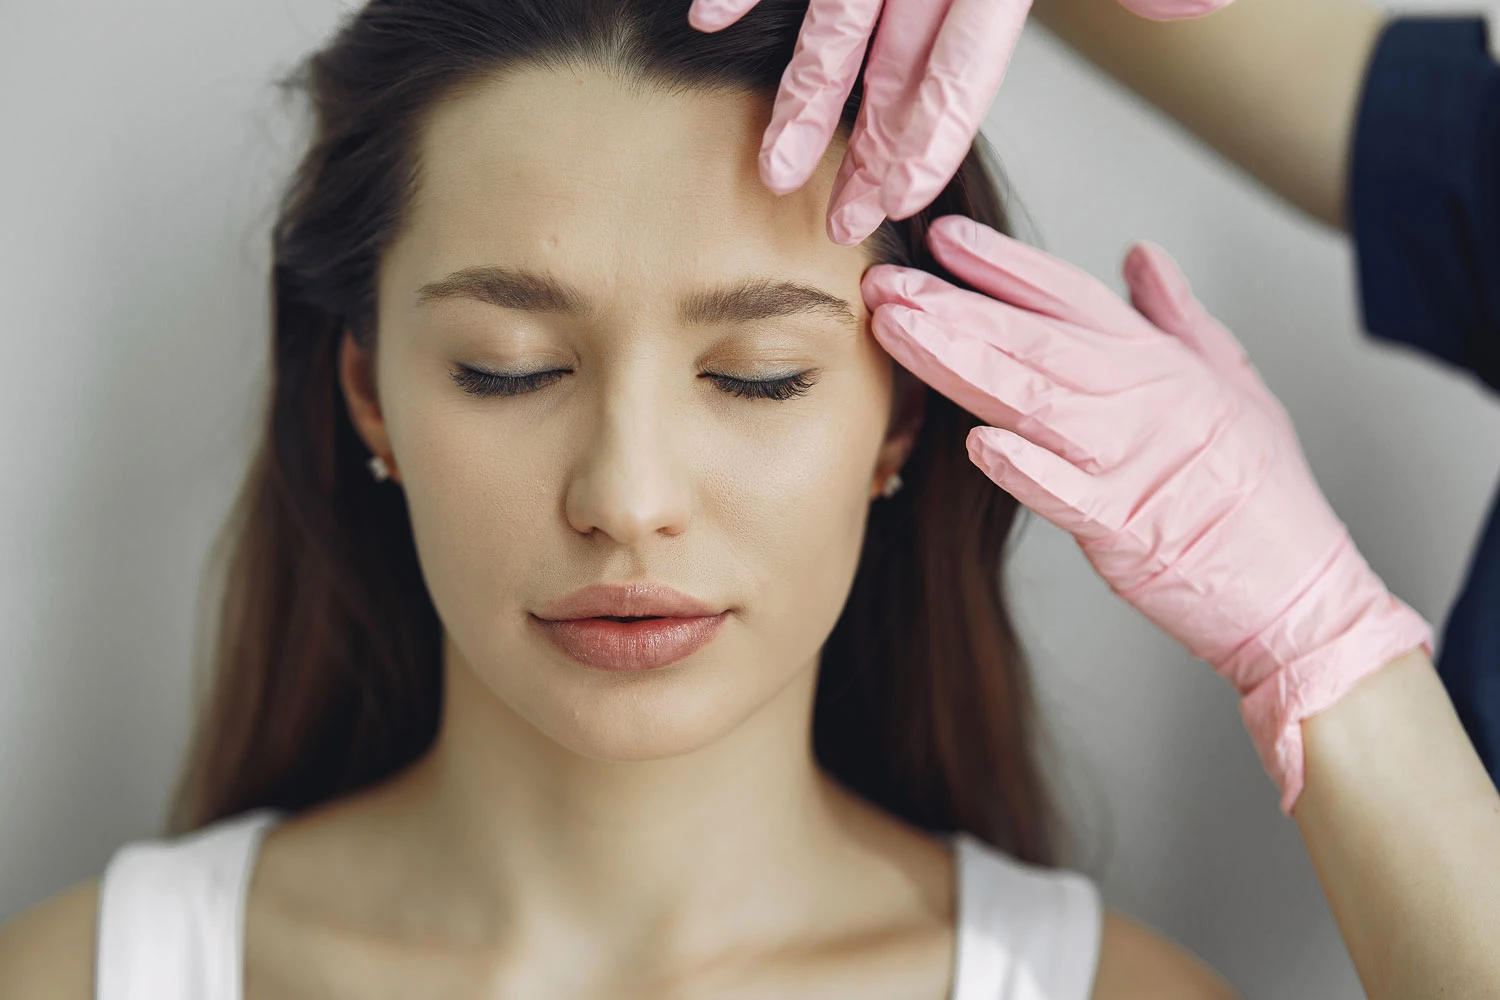 The Art Eyebrow Hair Transplantation image